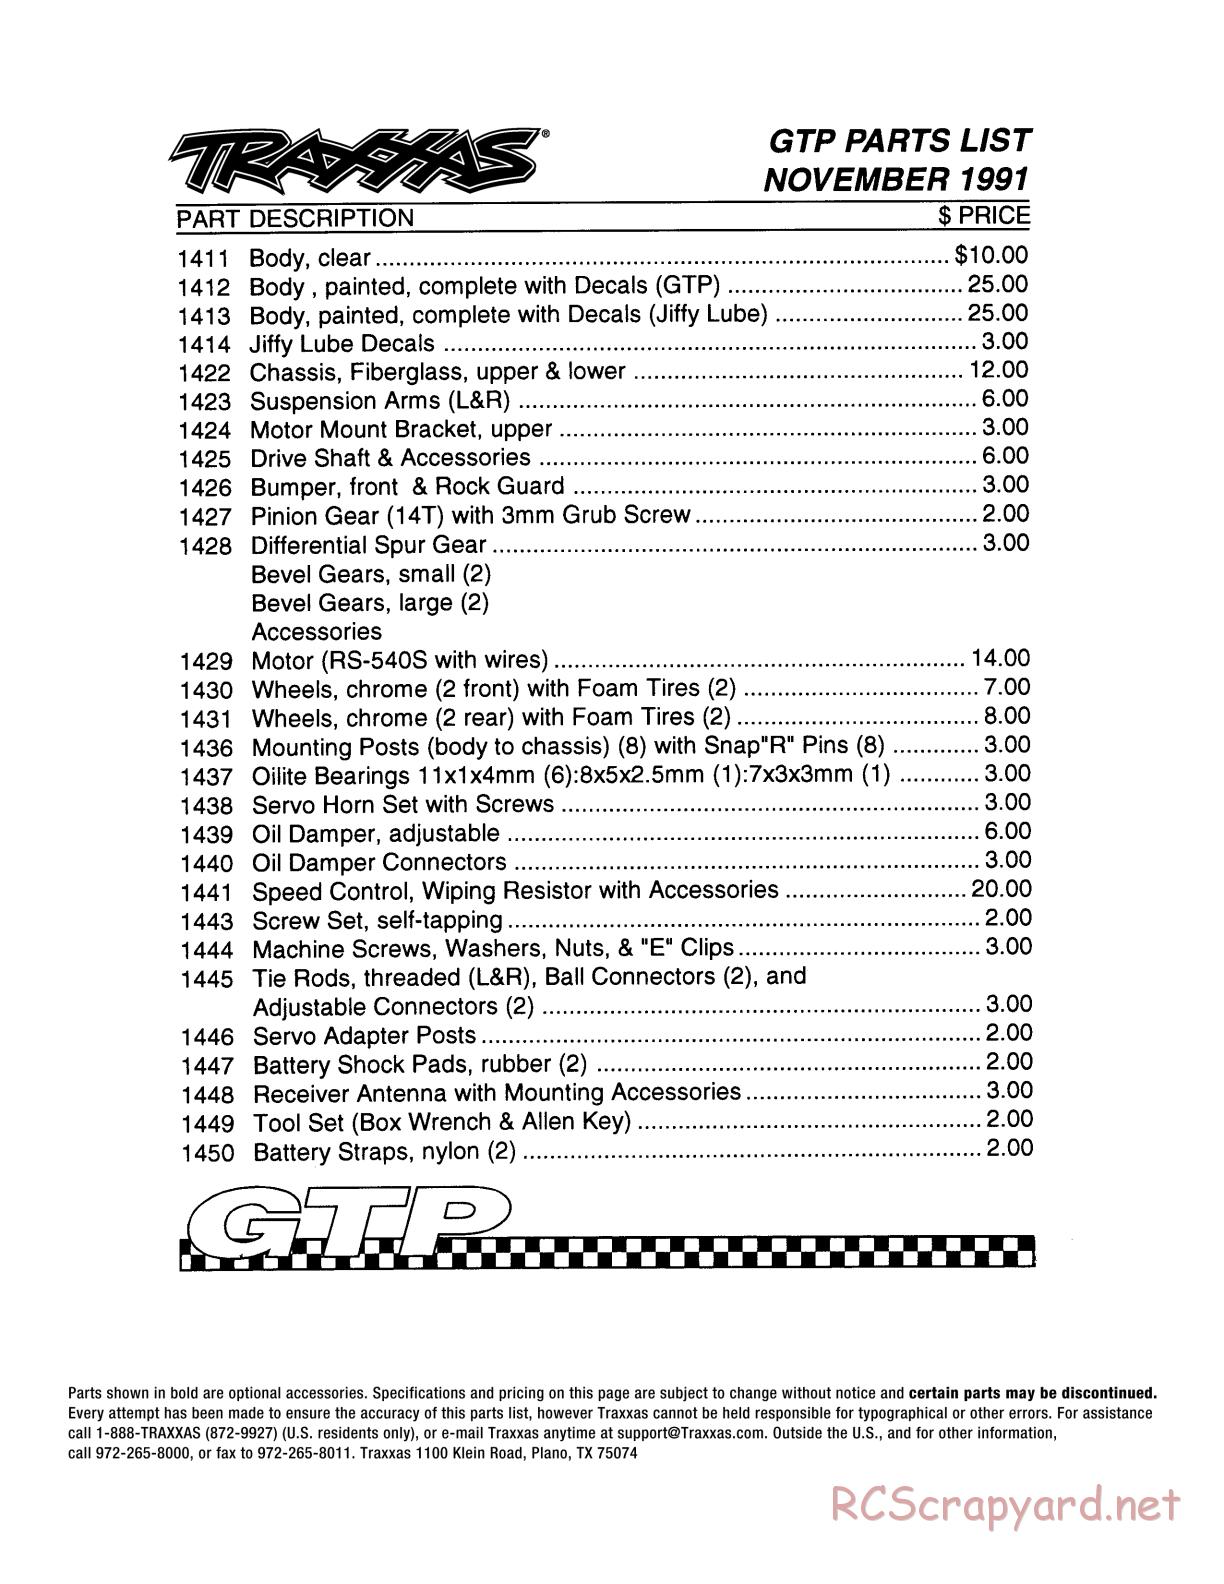 Traxxas - Fiero GTP (1987) - Parts List - Page 1